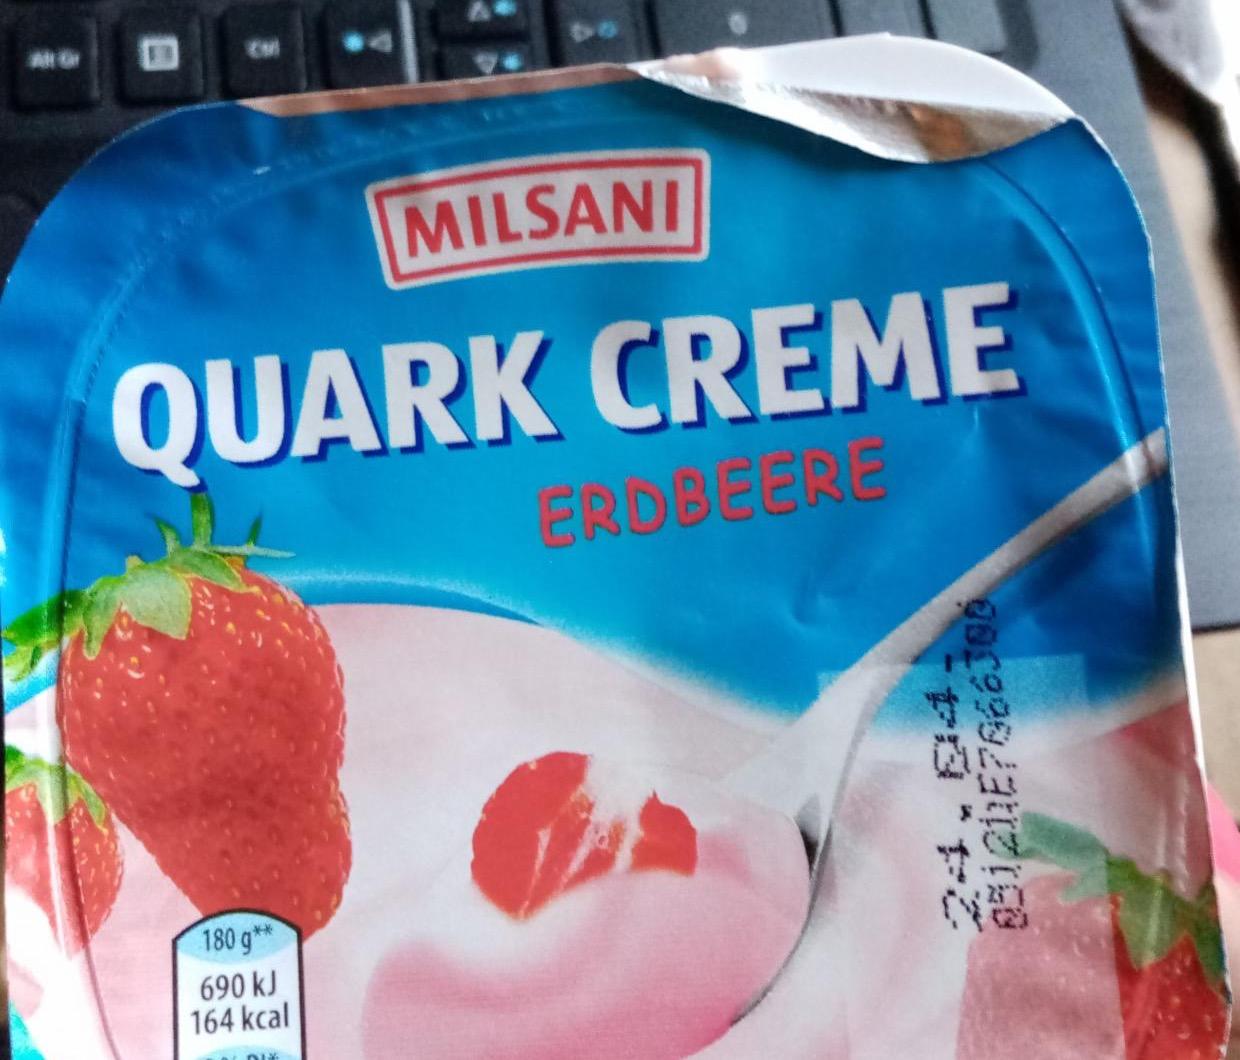 Képek - Quark creme erdbeere Milsani